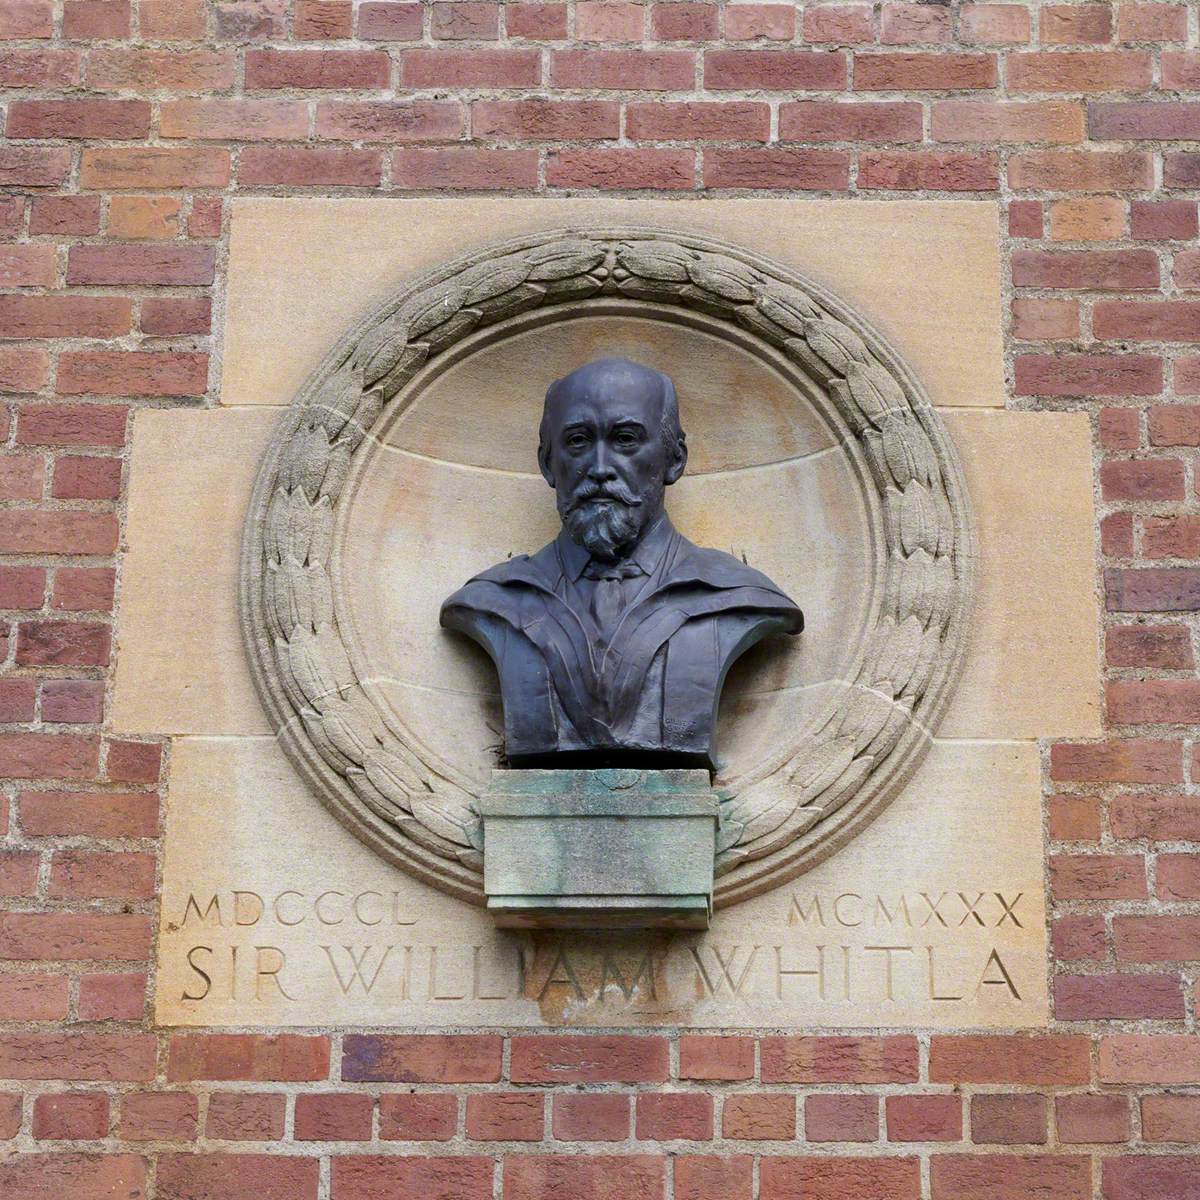 Sir William Whitla (1851–1933)